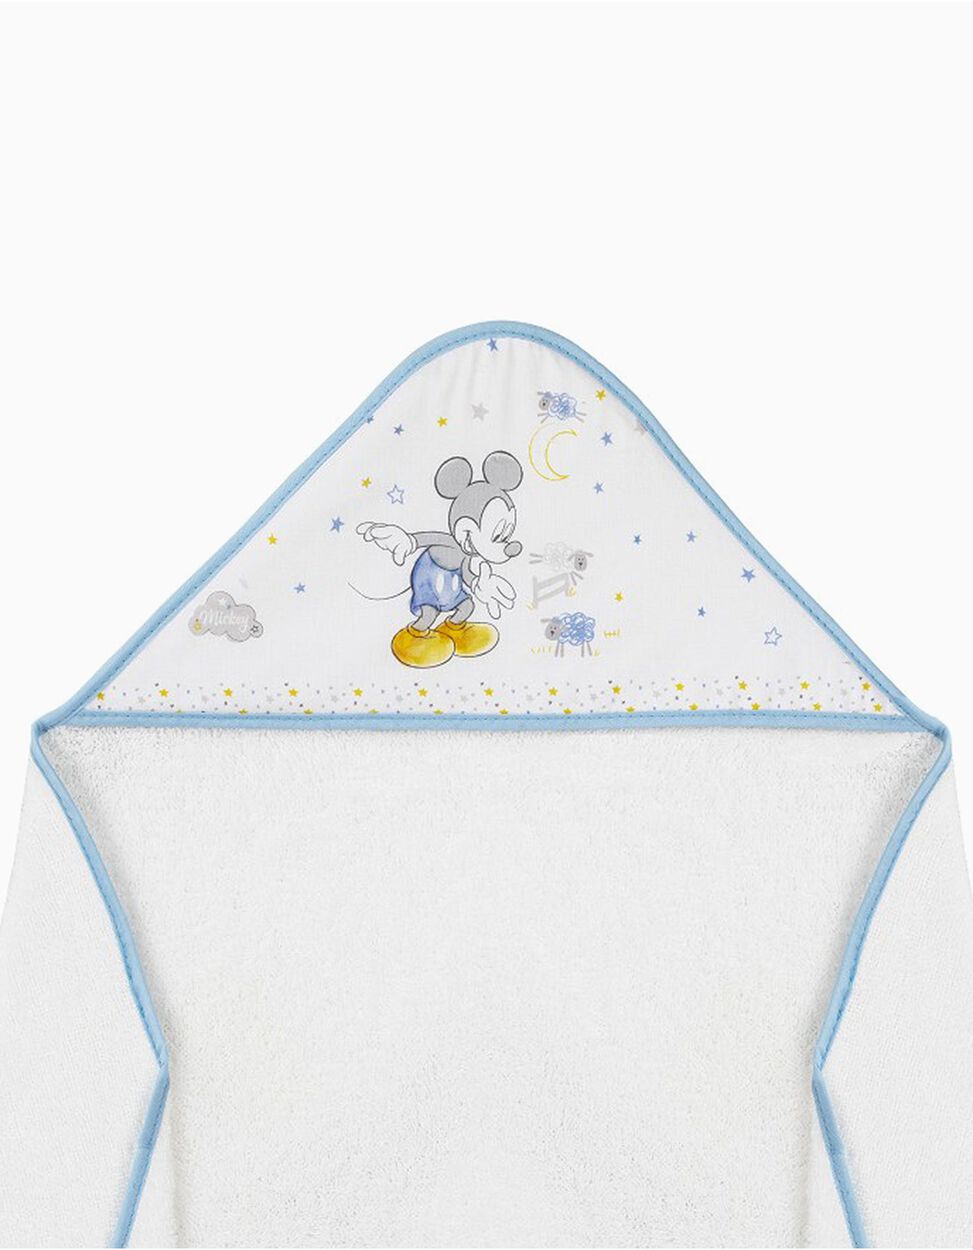 Toalha De Banho Mickey Disney White/Blue 100X100 Cm